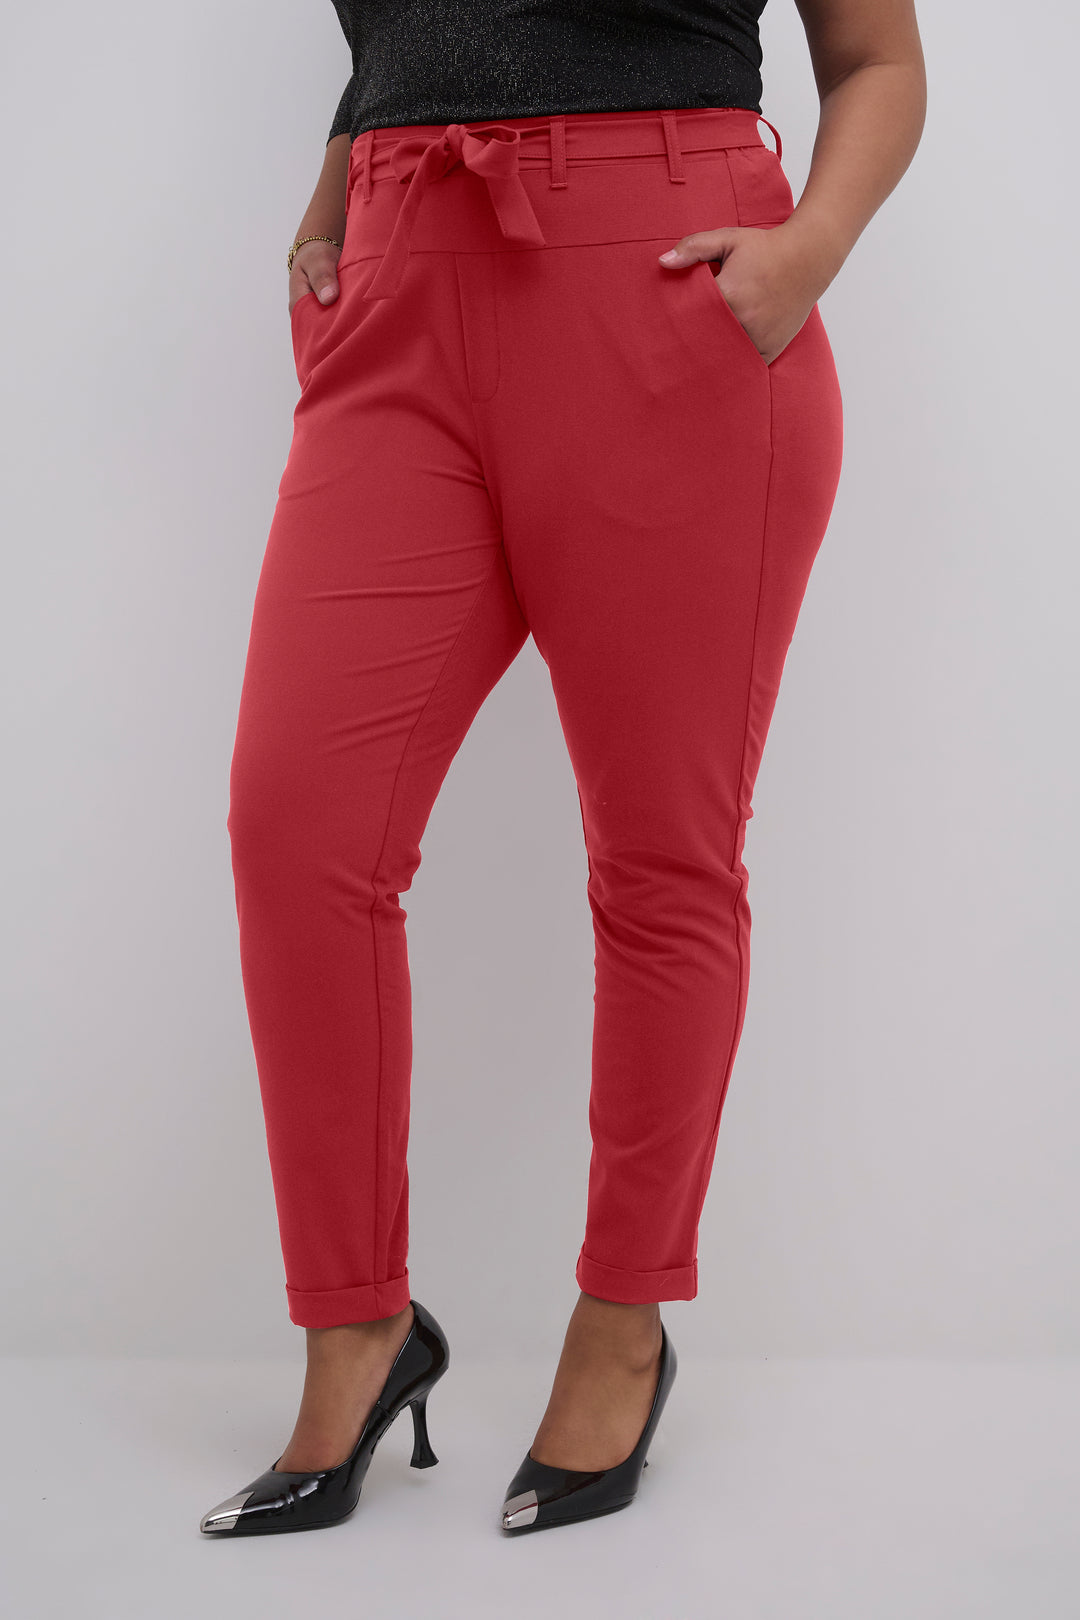 rode broek met omslag - kaffe curve - - grote maten - dameskleding - kledingwinkel - herent - leuven